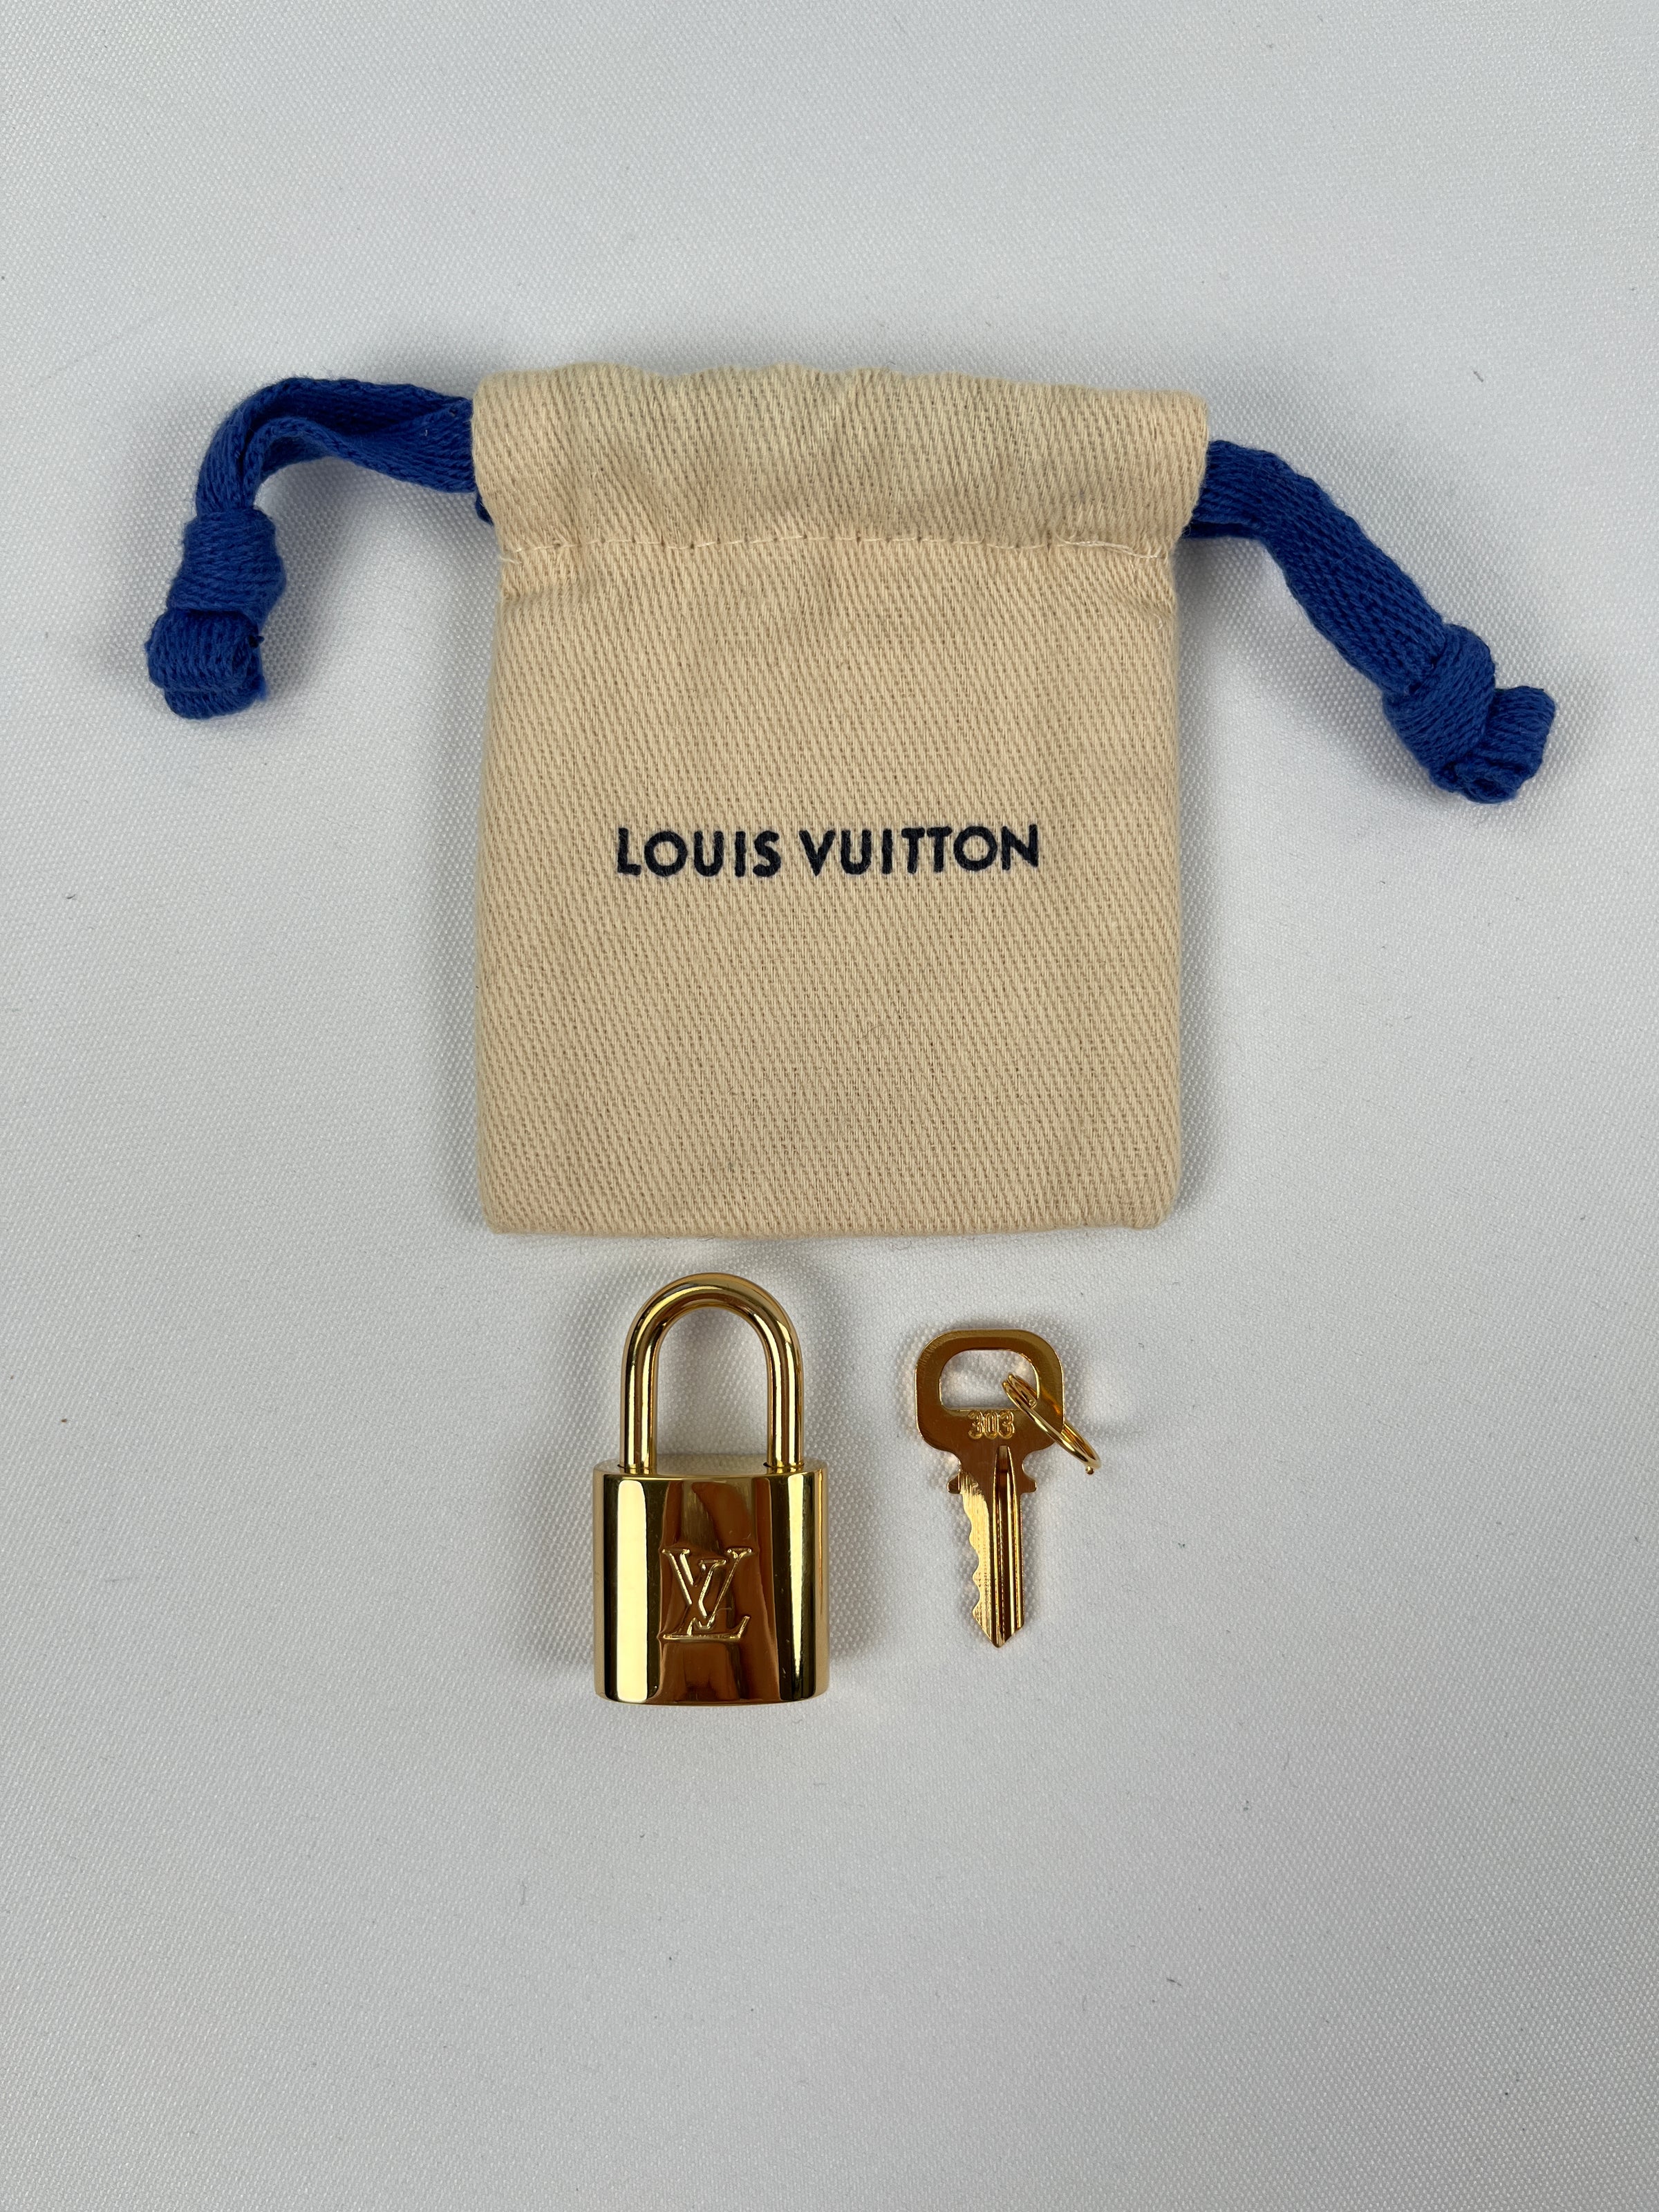 Authentic Louis Vuitton Lock/Padlock & Key Set - Shiny Golden Brass Tone